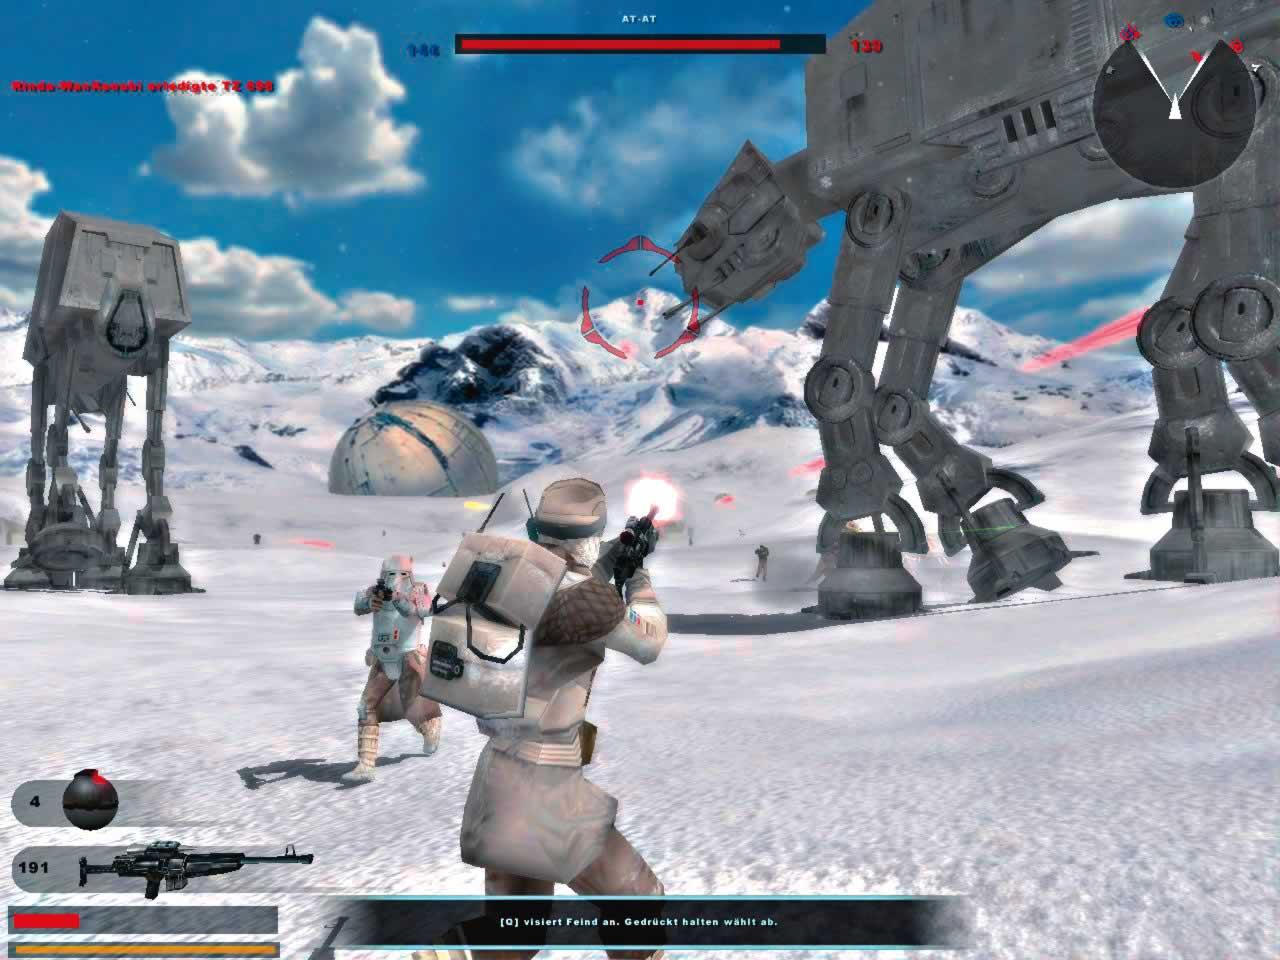 Star Wars Star Wars: Battlefront II PC Gaming